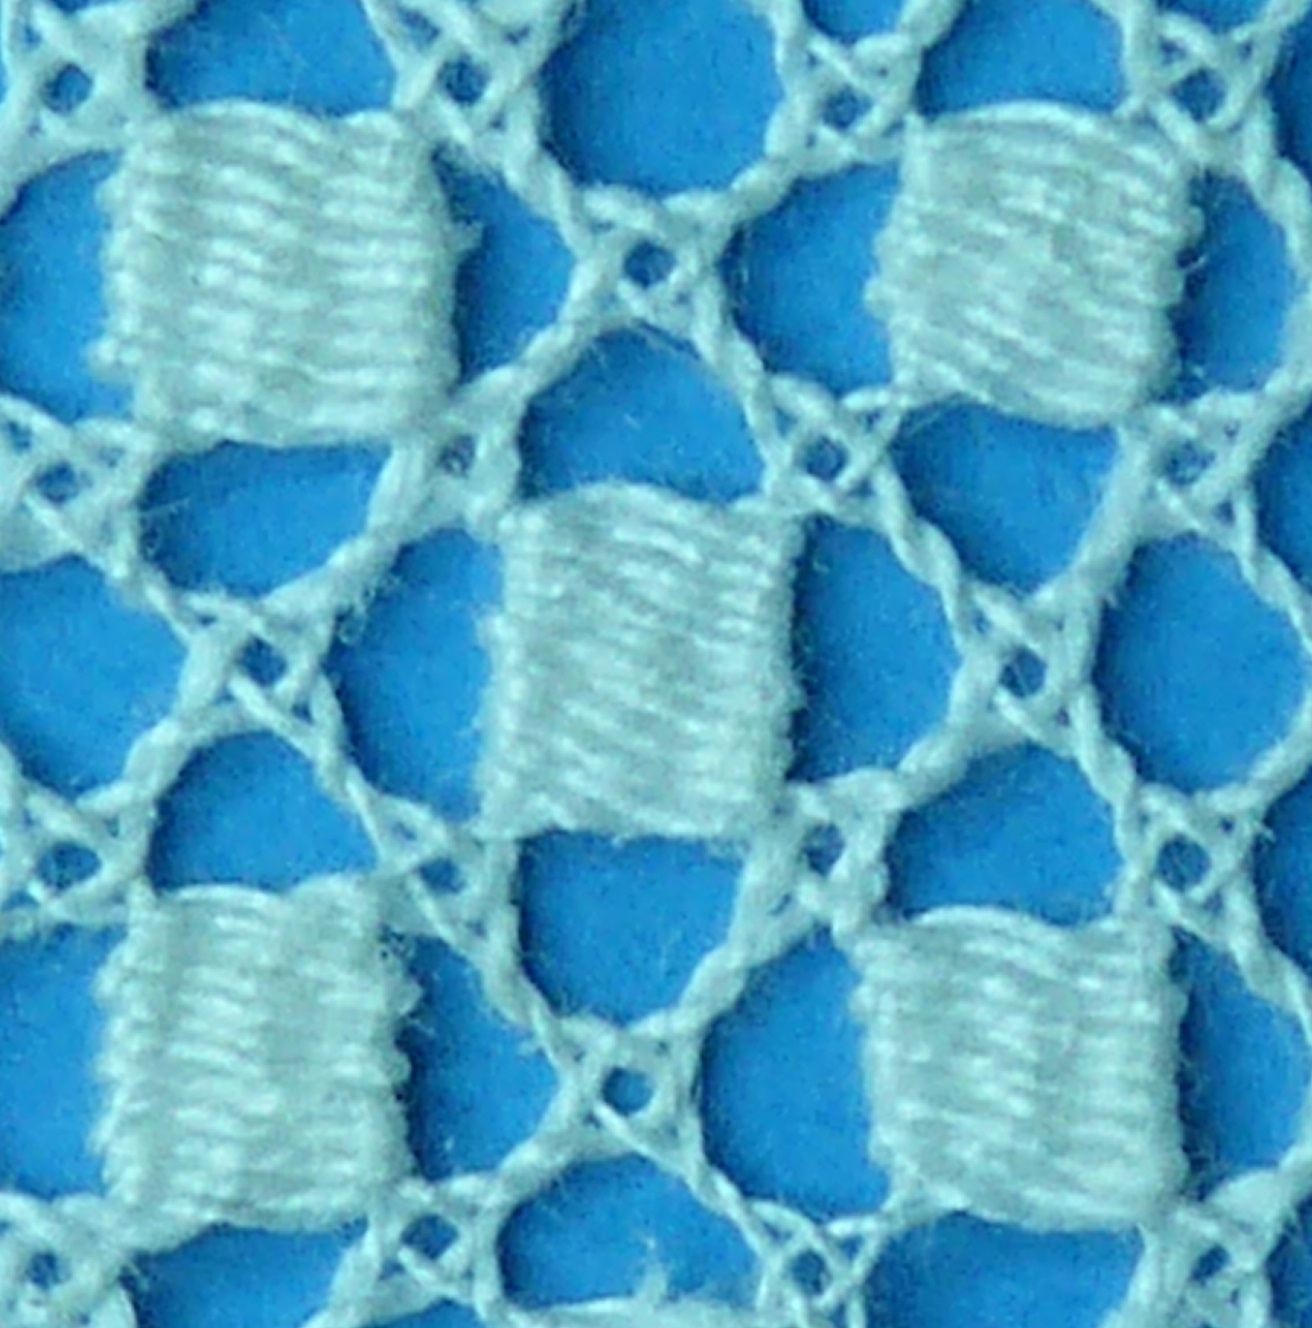 Bobbin tape lace - Wikipedia